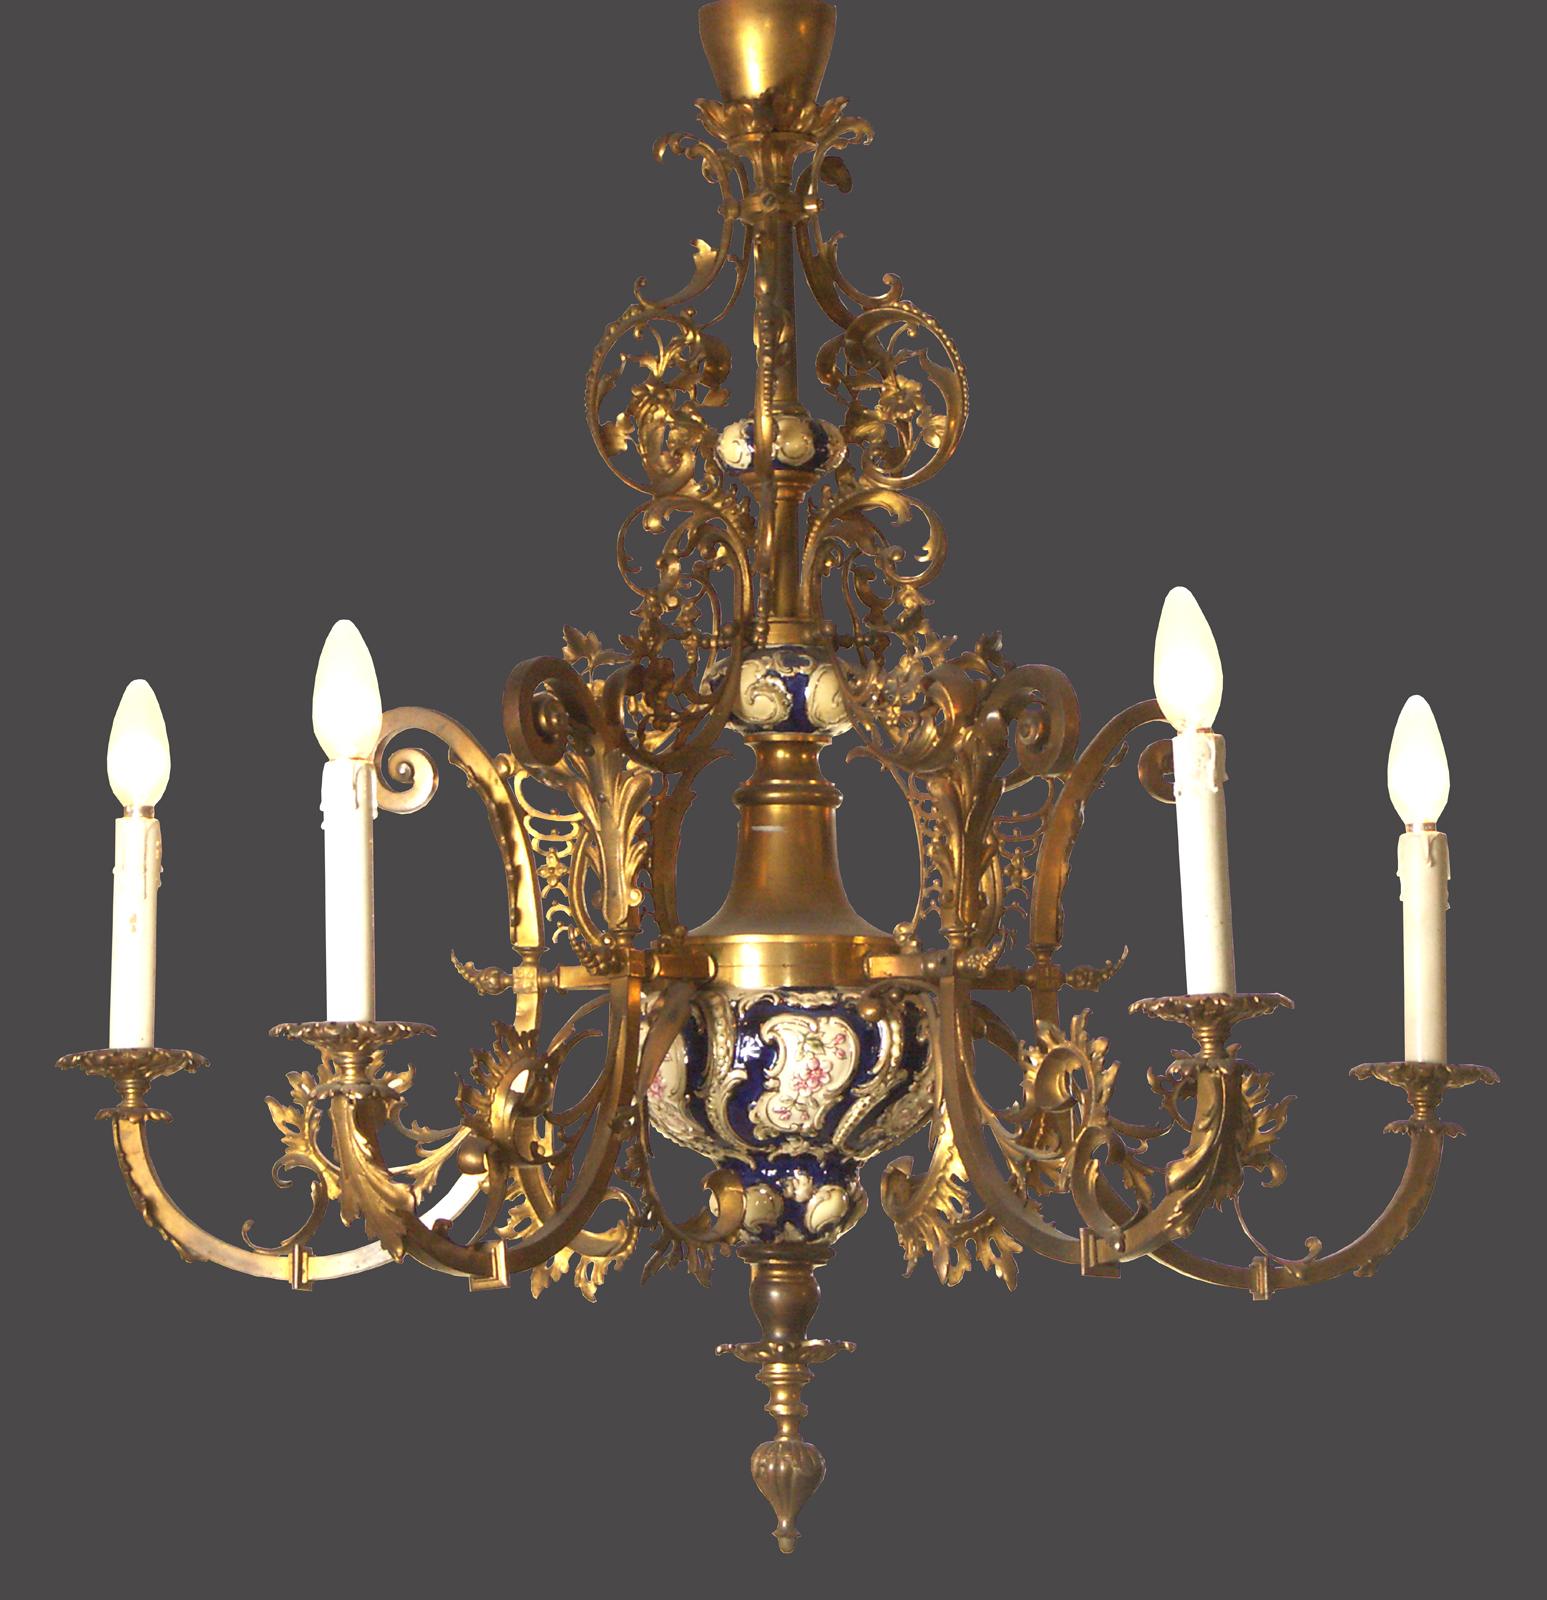 19th Century Original 19th Historistic Brass and Ceramic Baroque or Rococo Chandelier For Sale